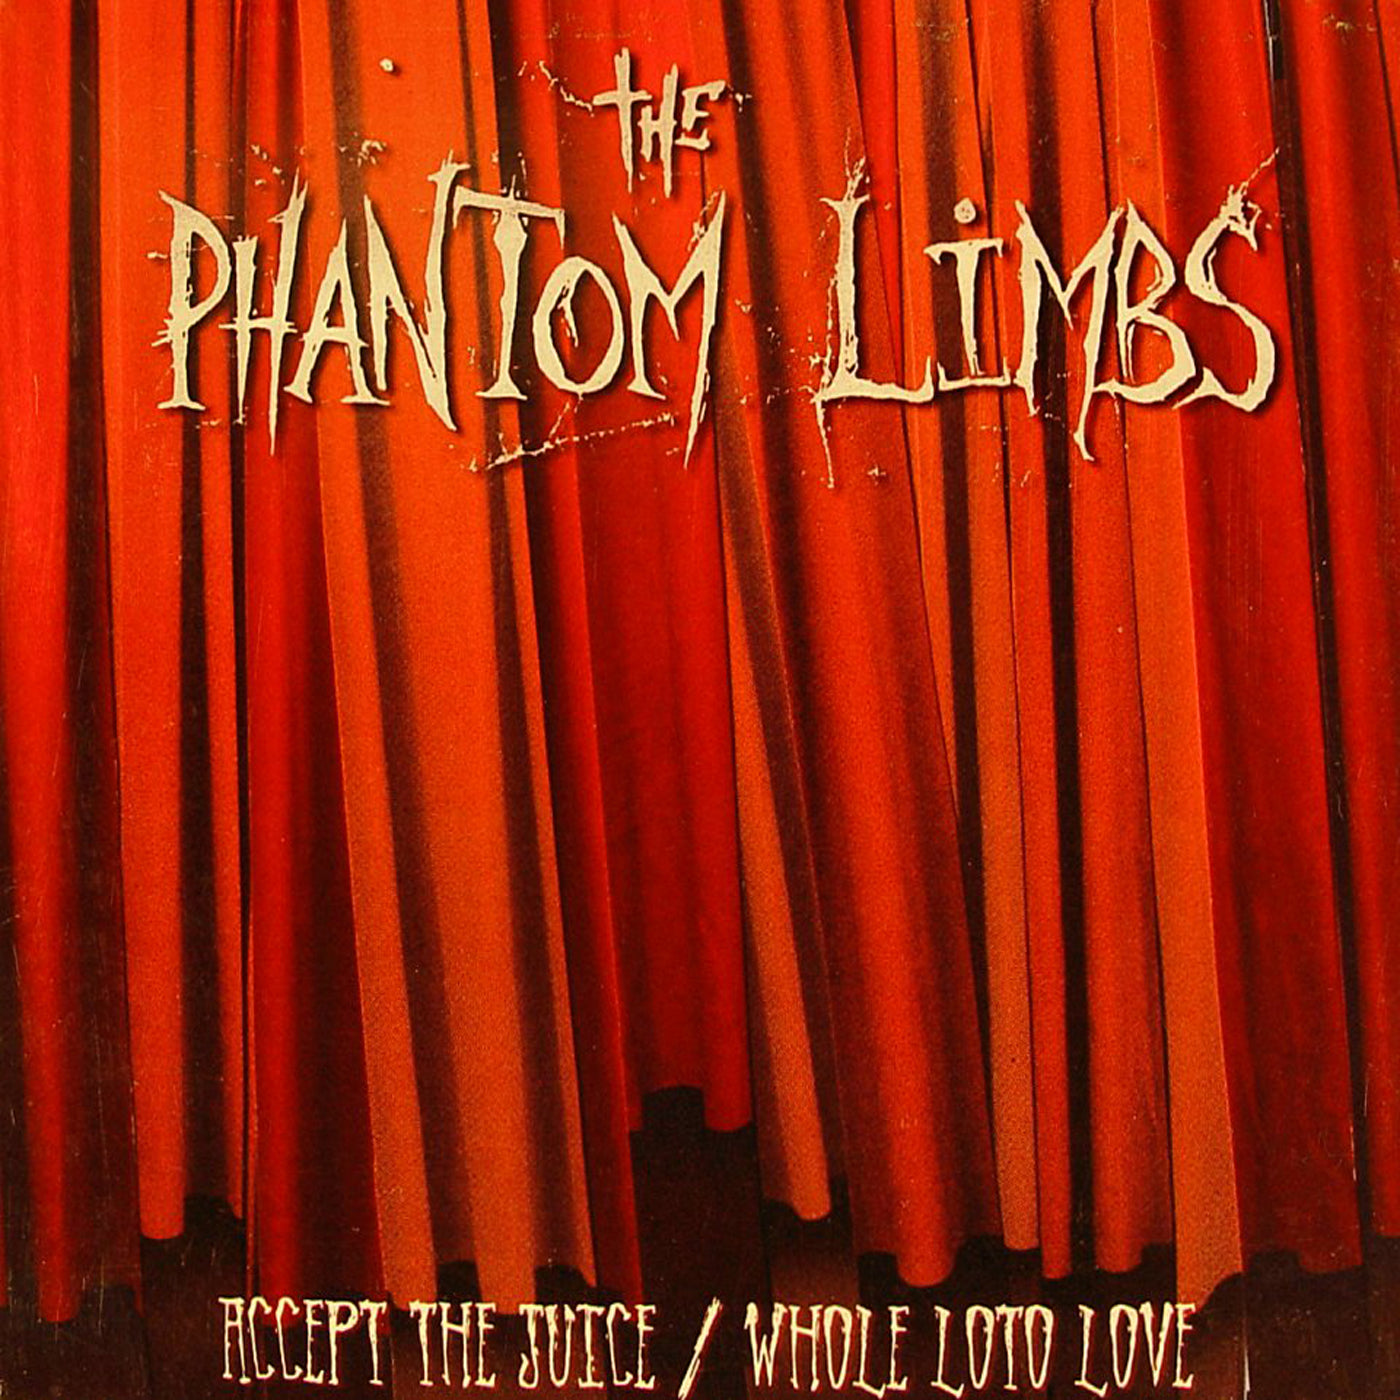 v392 - The Phantom Limbs - "Accept The Juice / Whole Loto Love"